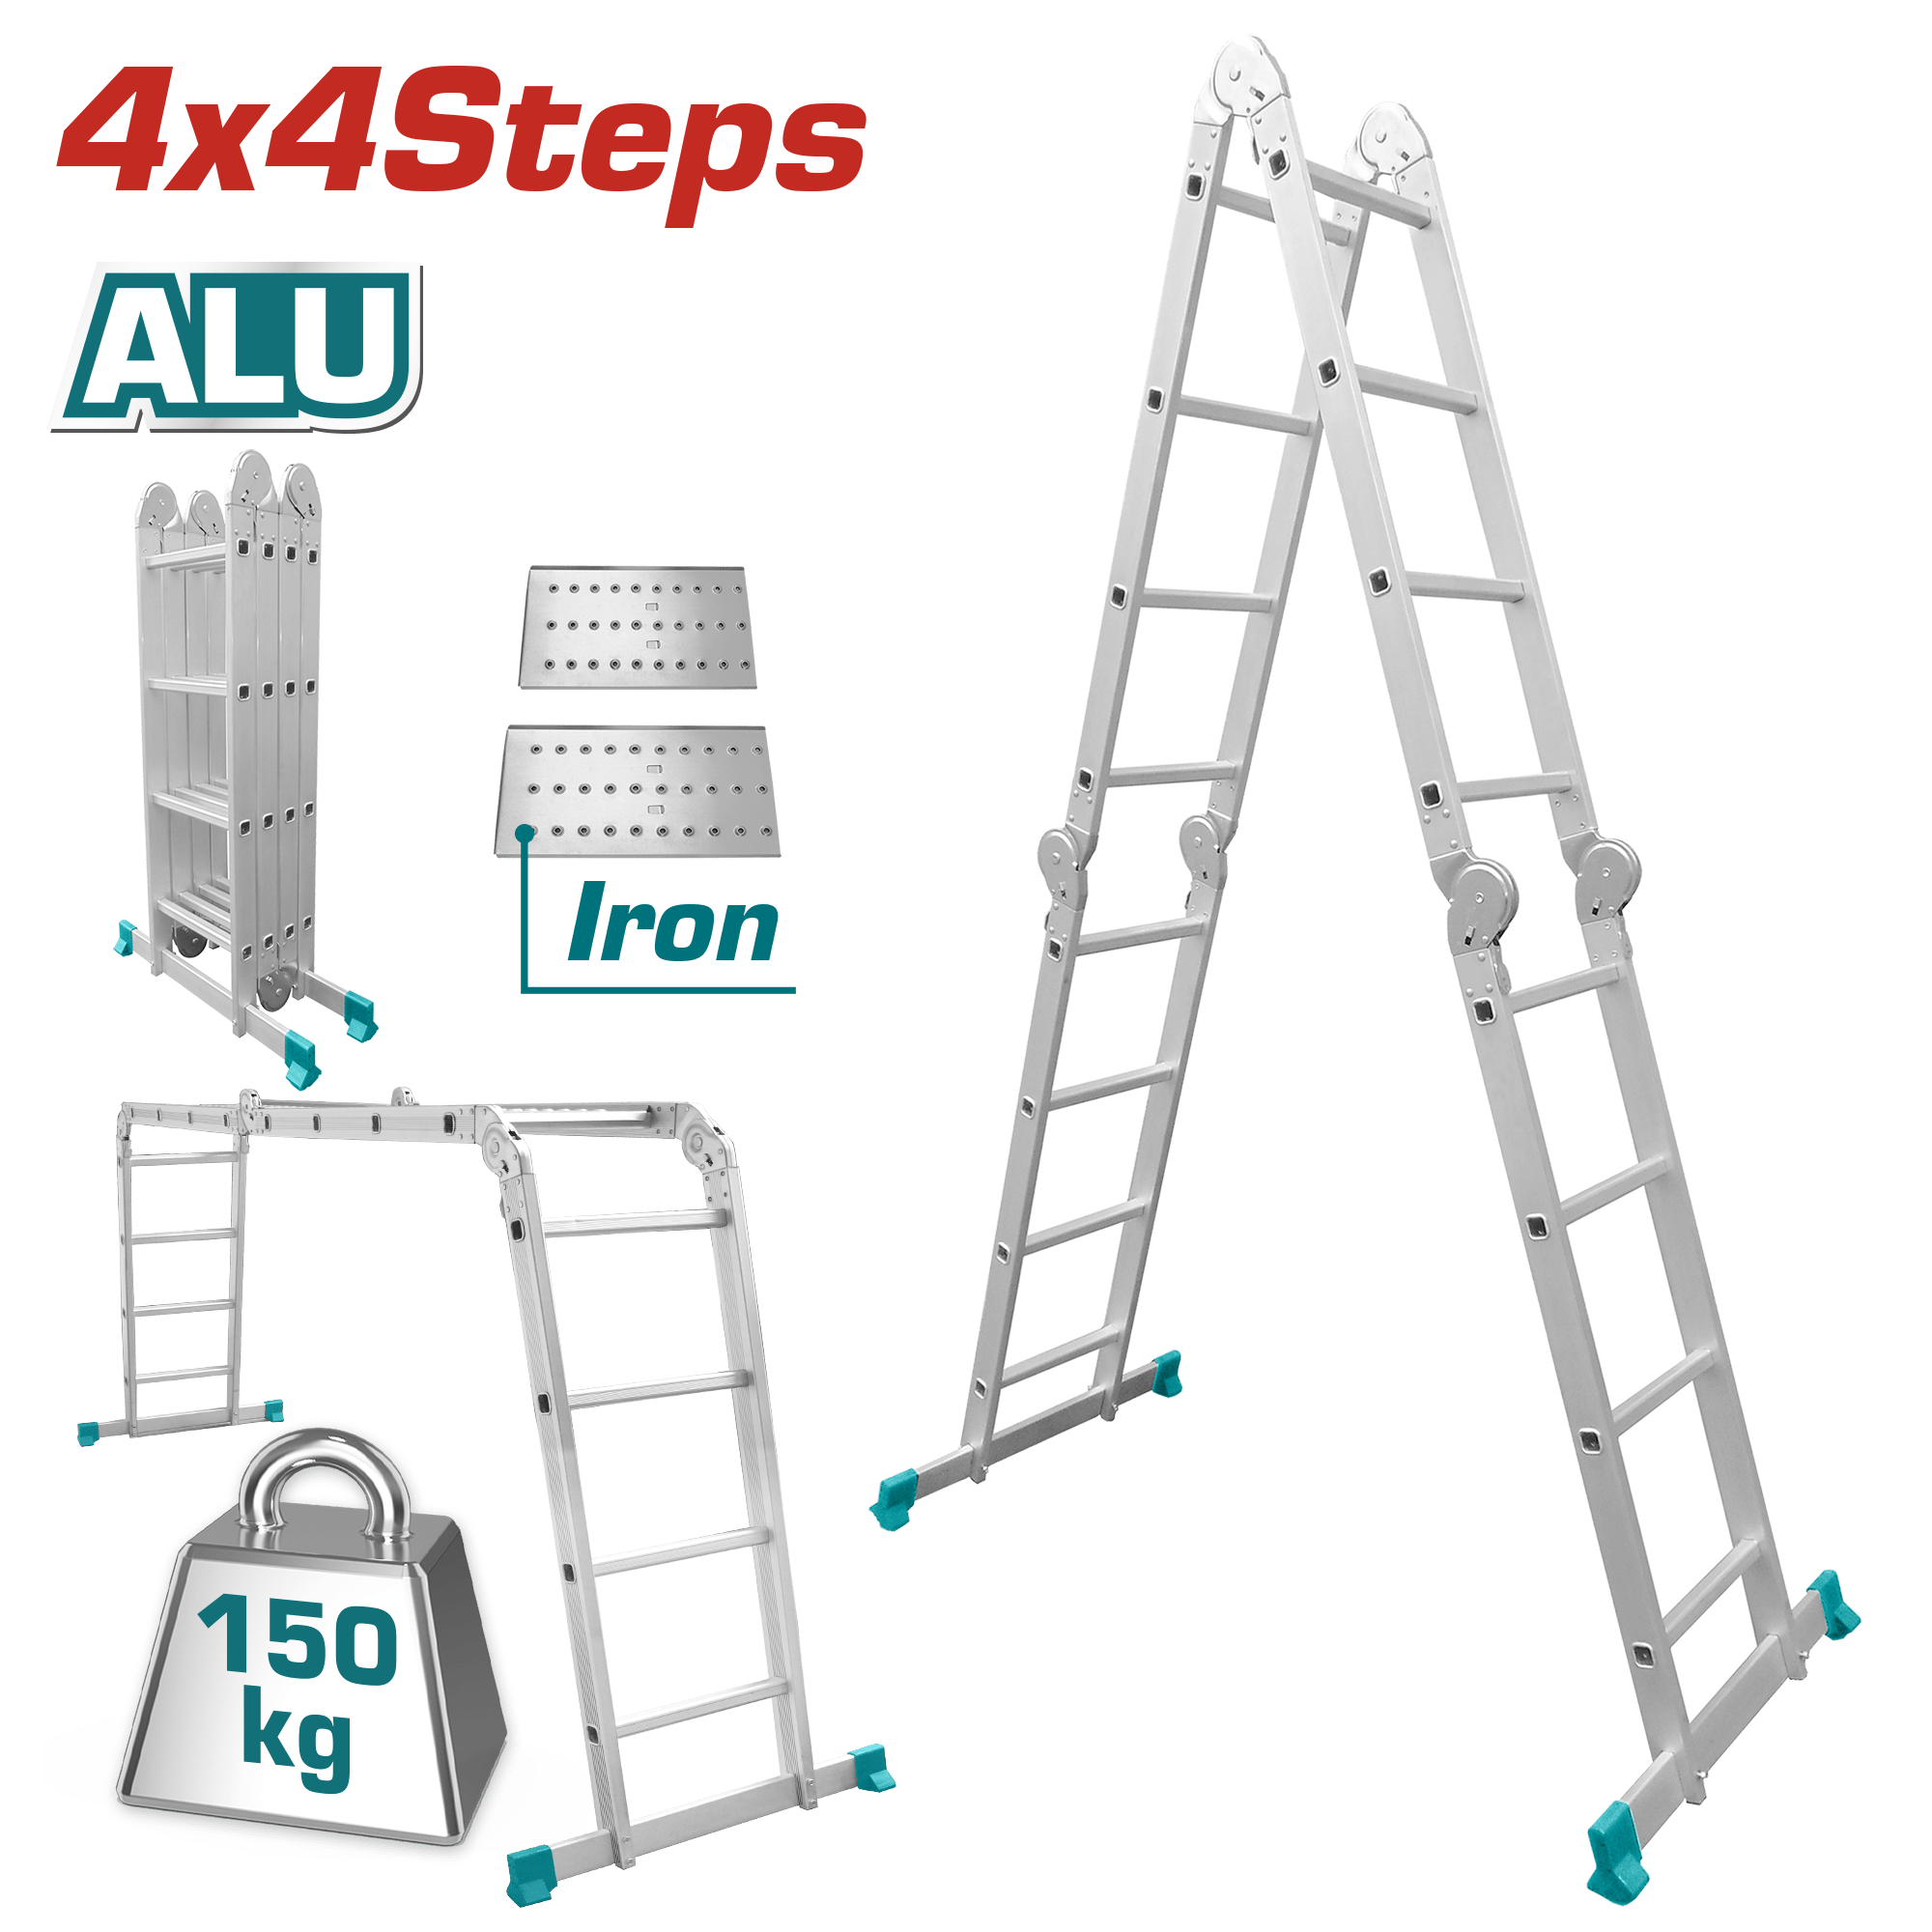 Total Multi-Purpose Aluminum Ladder 4x4 - THLAD04441 | Supply Master | Accra, Ghana Ladder Buy Tools hardware Building materials